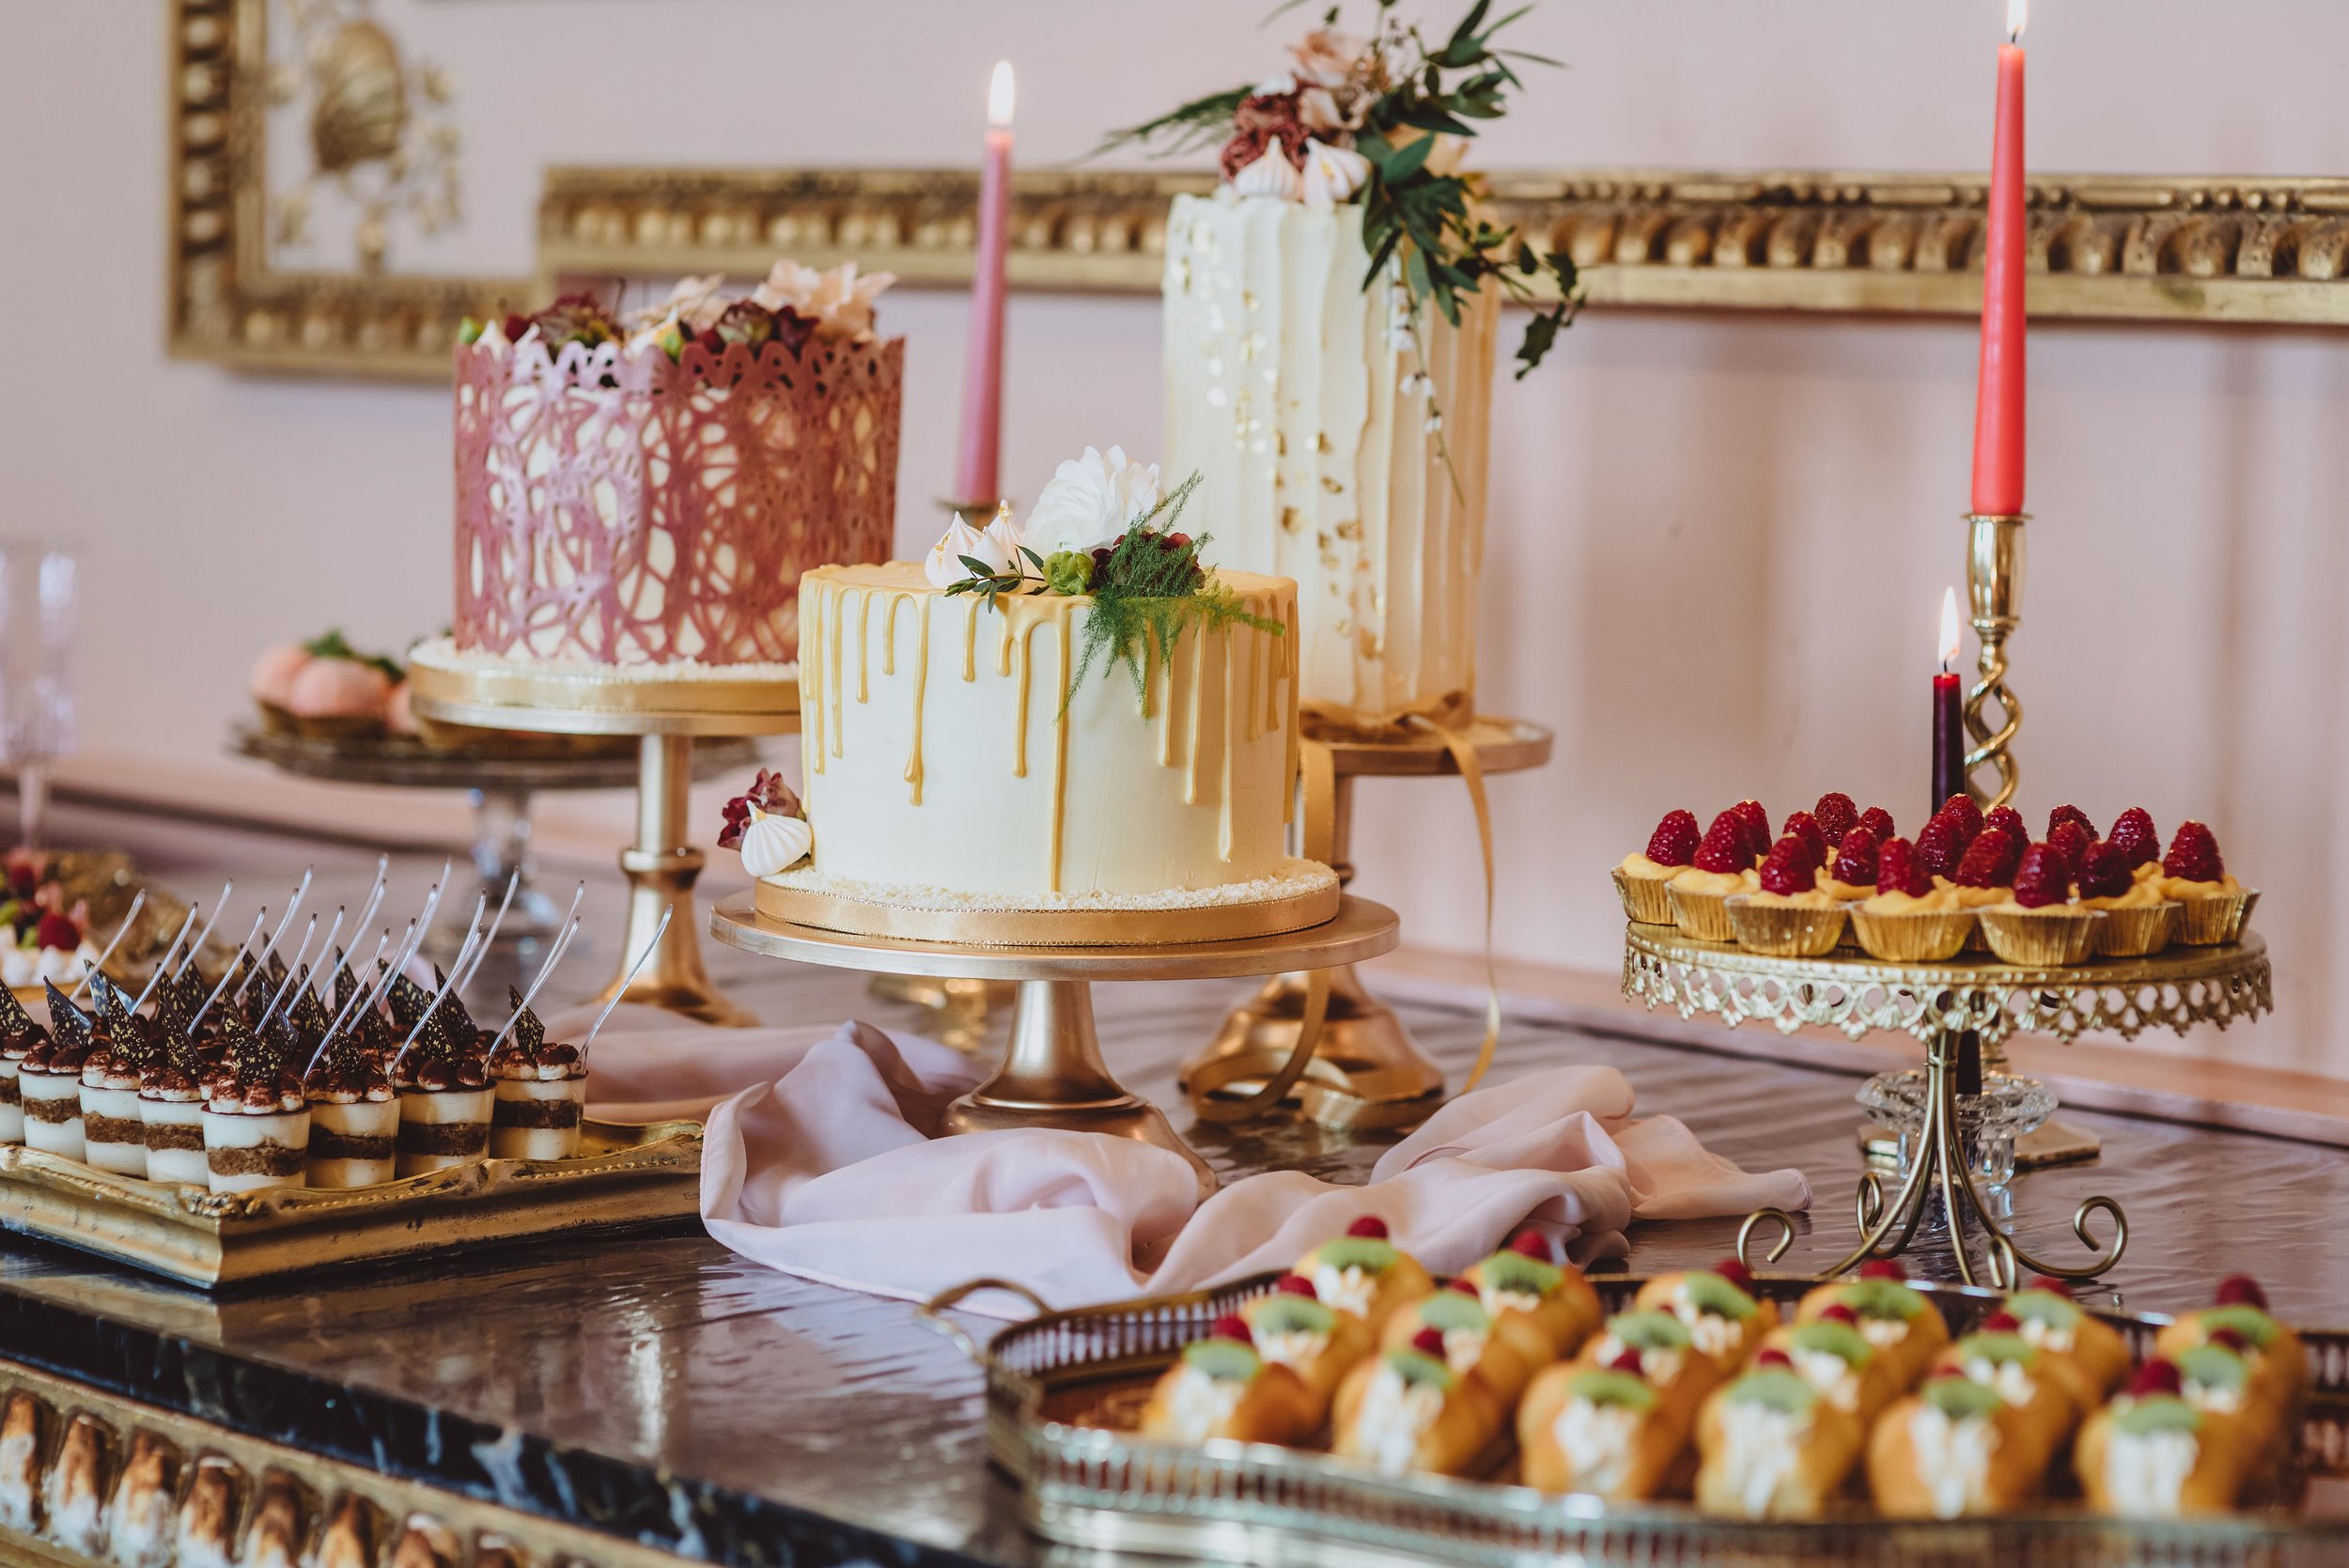 Italian style wedding cakes